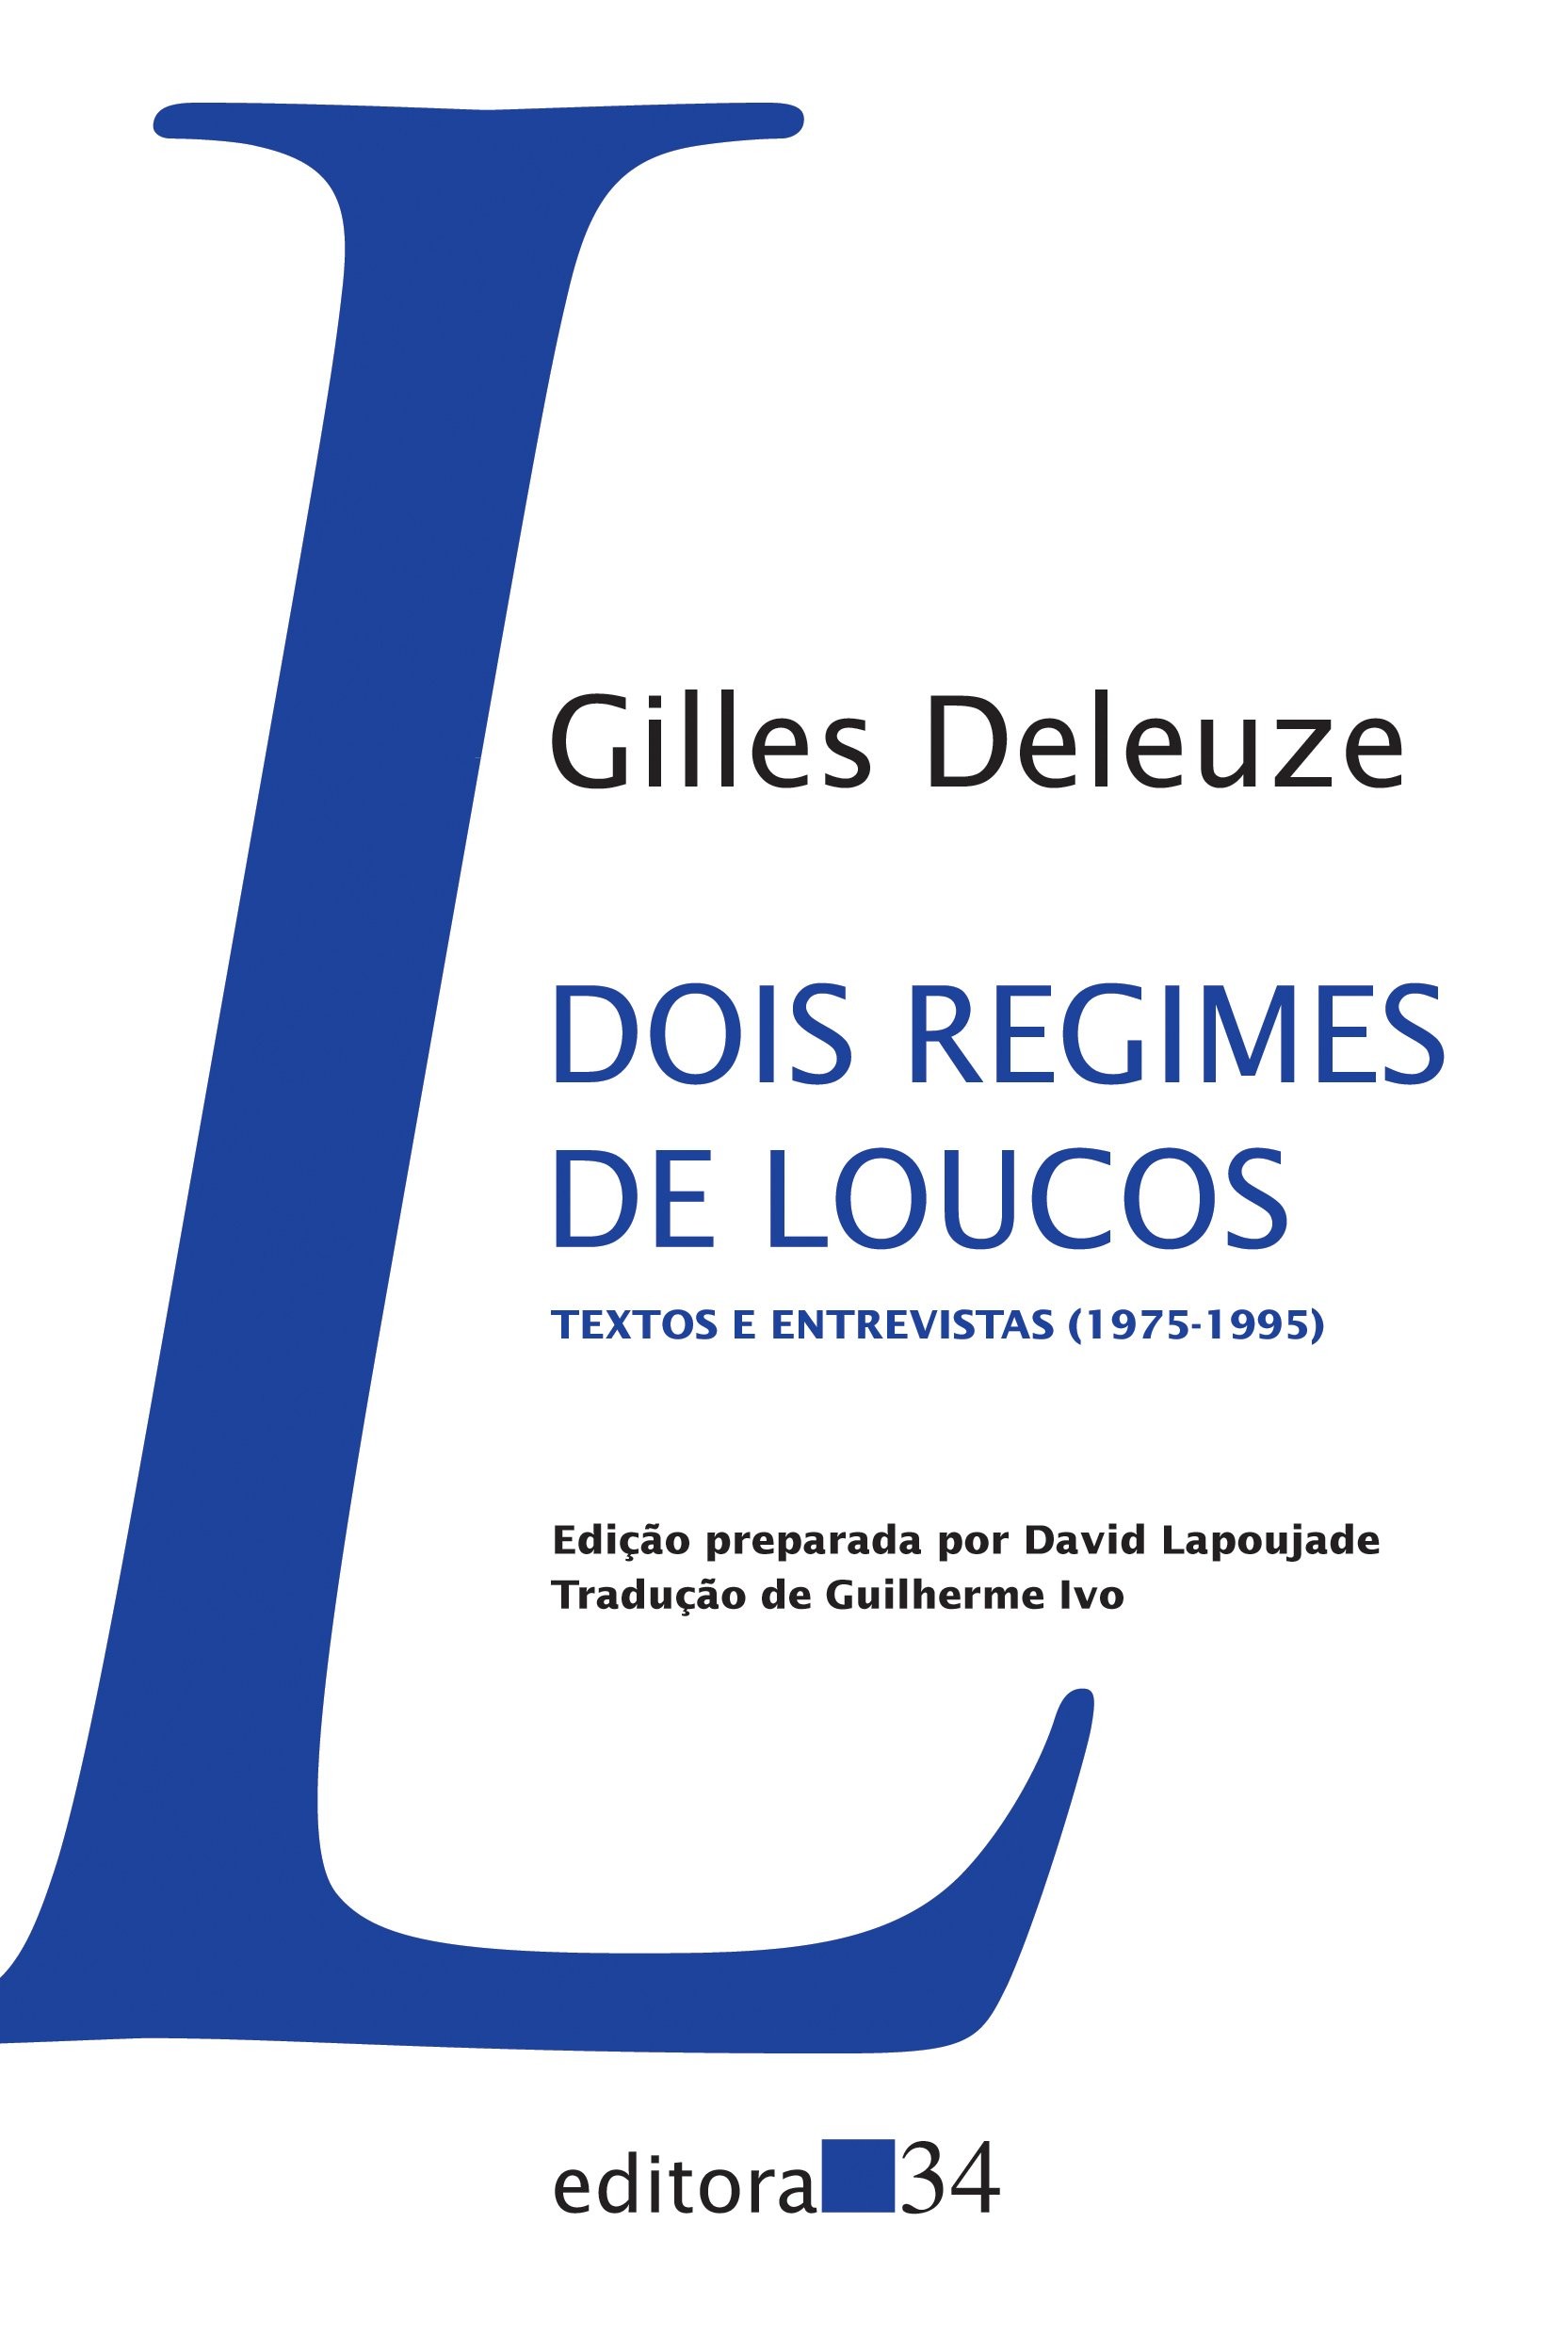 Dois Regimes de Loucos - Textos e Entrevistas (1975-1995)